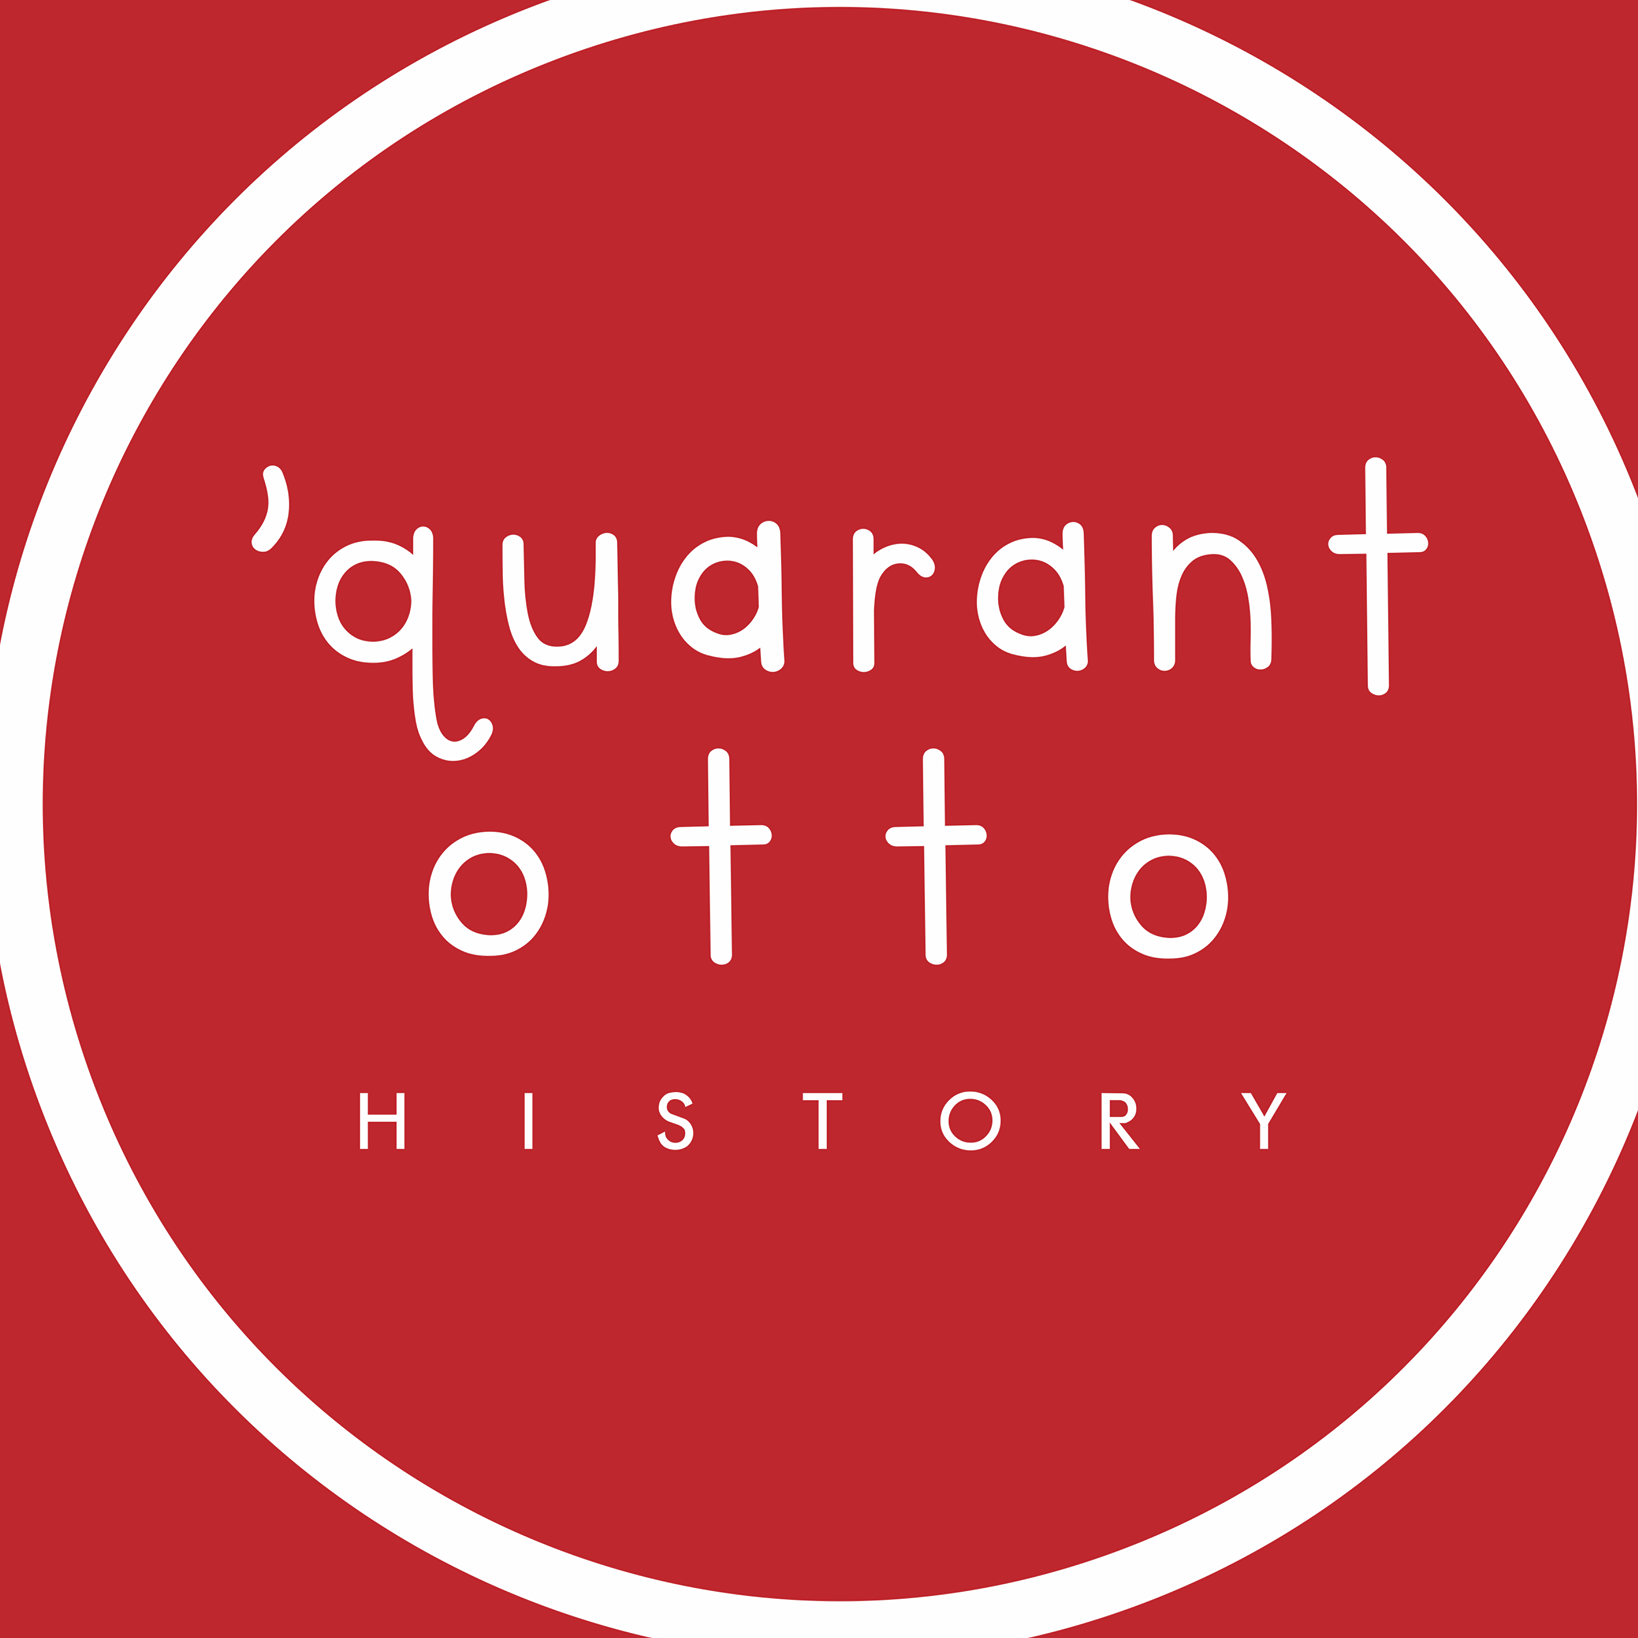 Quarantotto History